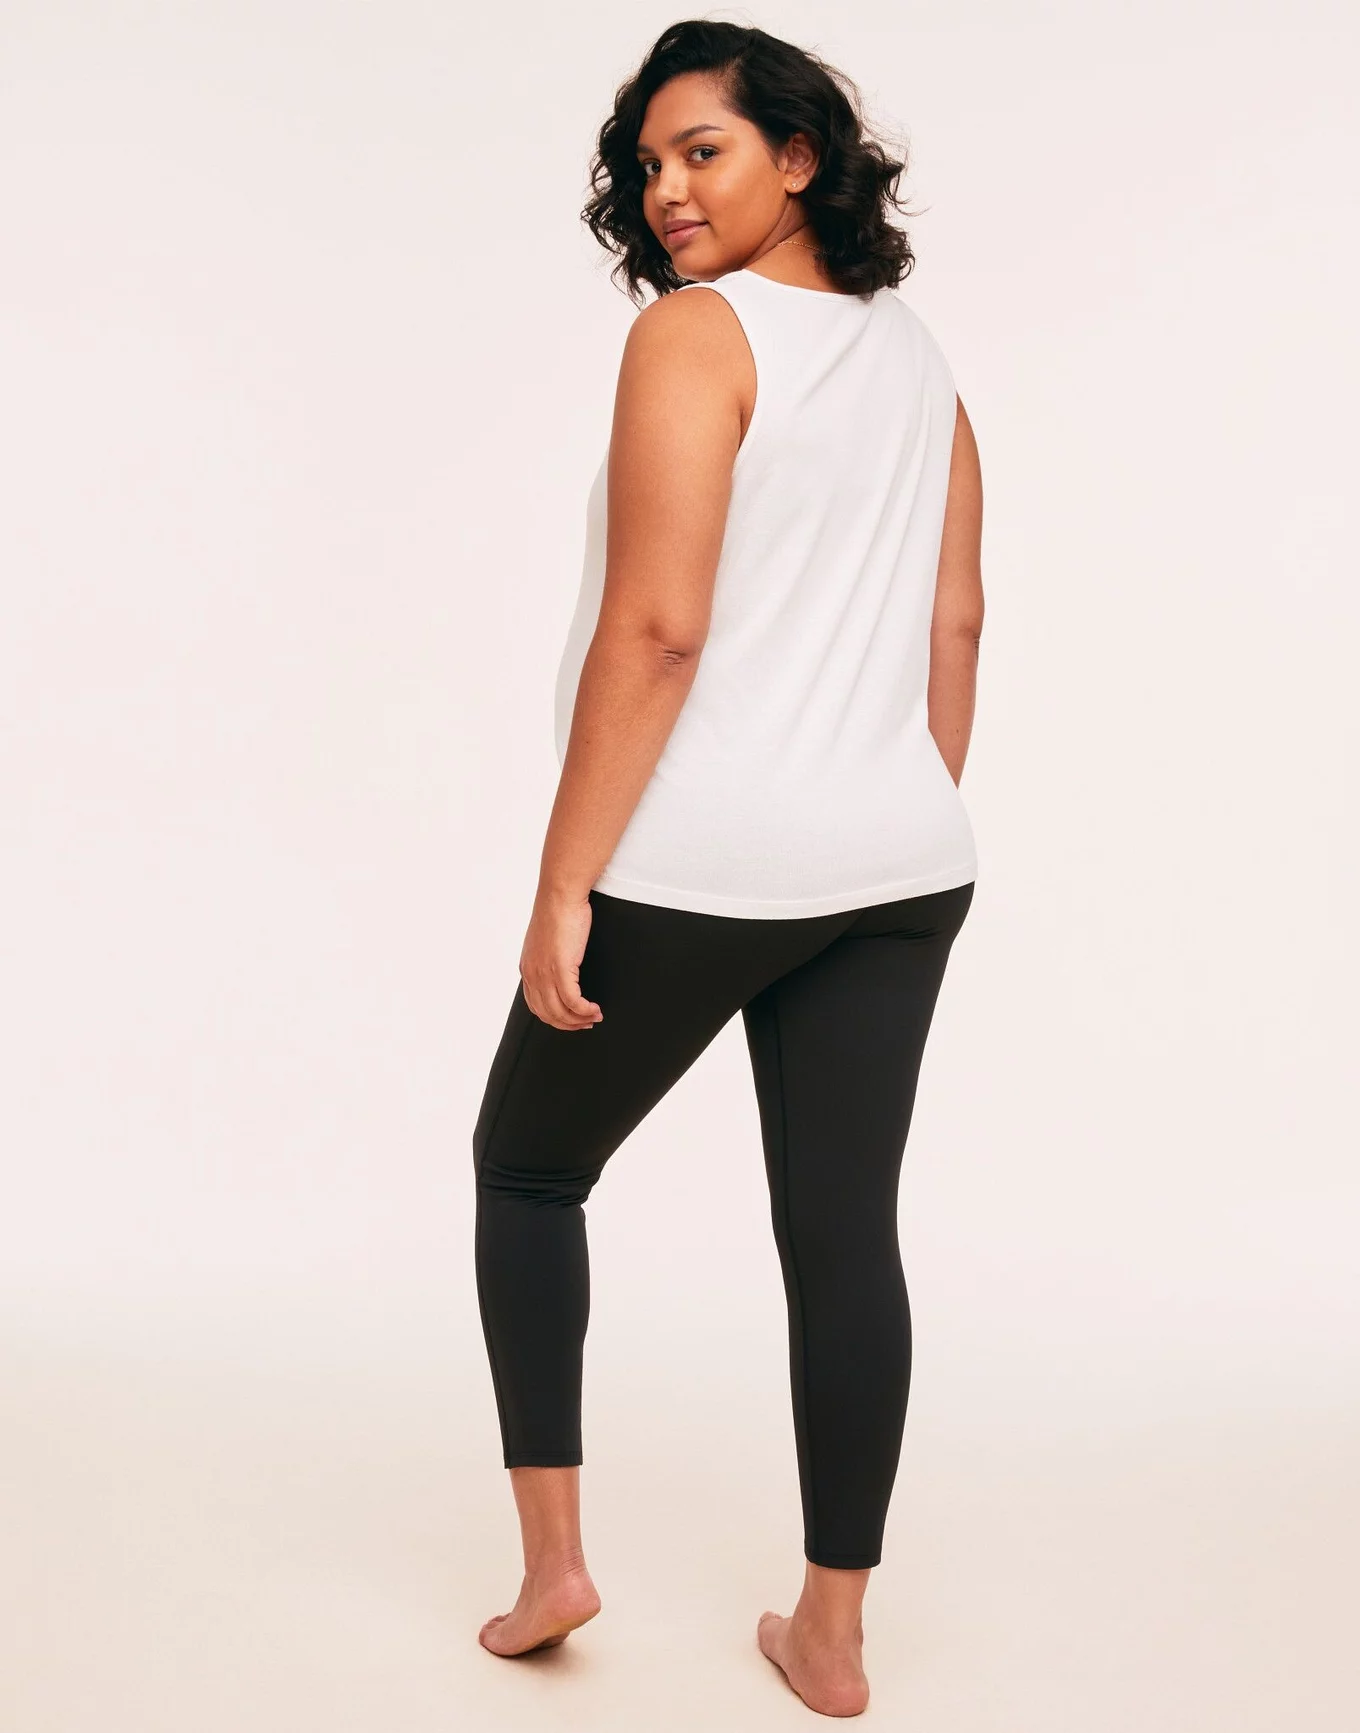  TNNZEET 3 Pack Plus Size Women's Leggings, Black Maternity Workout  Yoga Pants : Clothing, Shoes & Jewelry